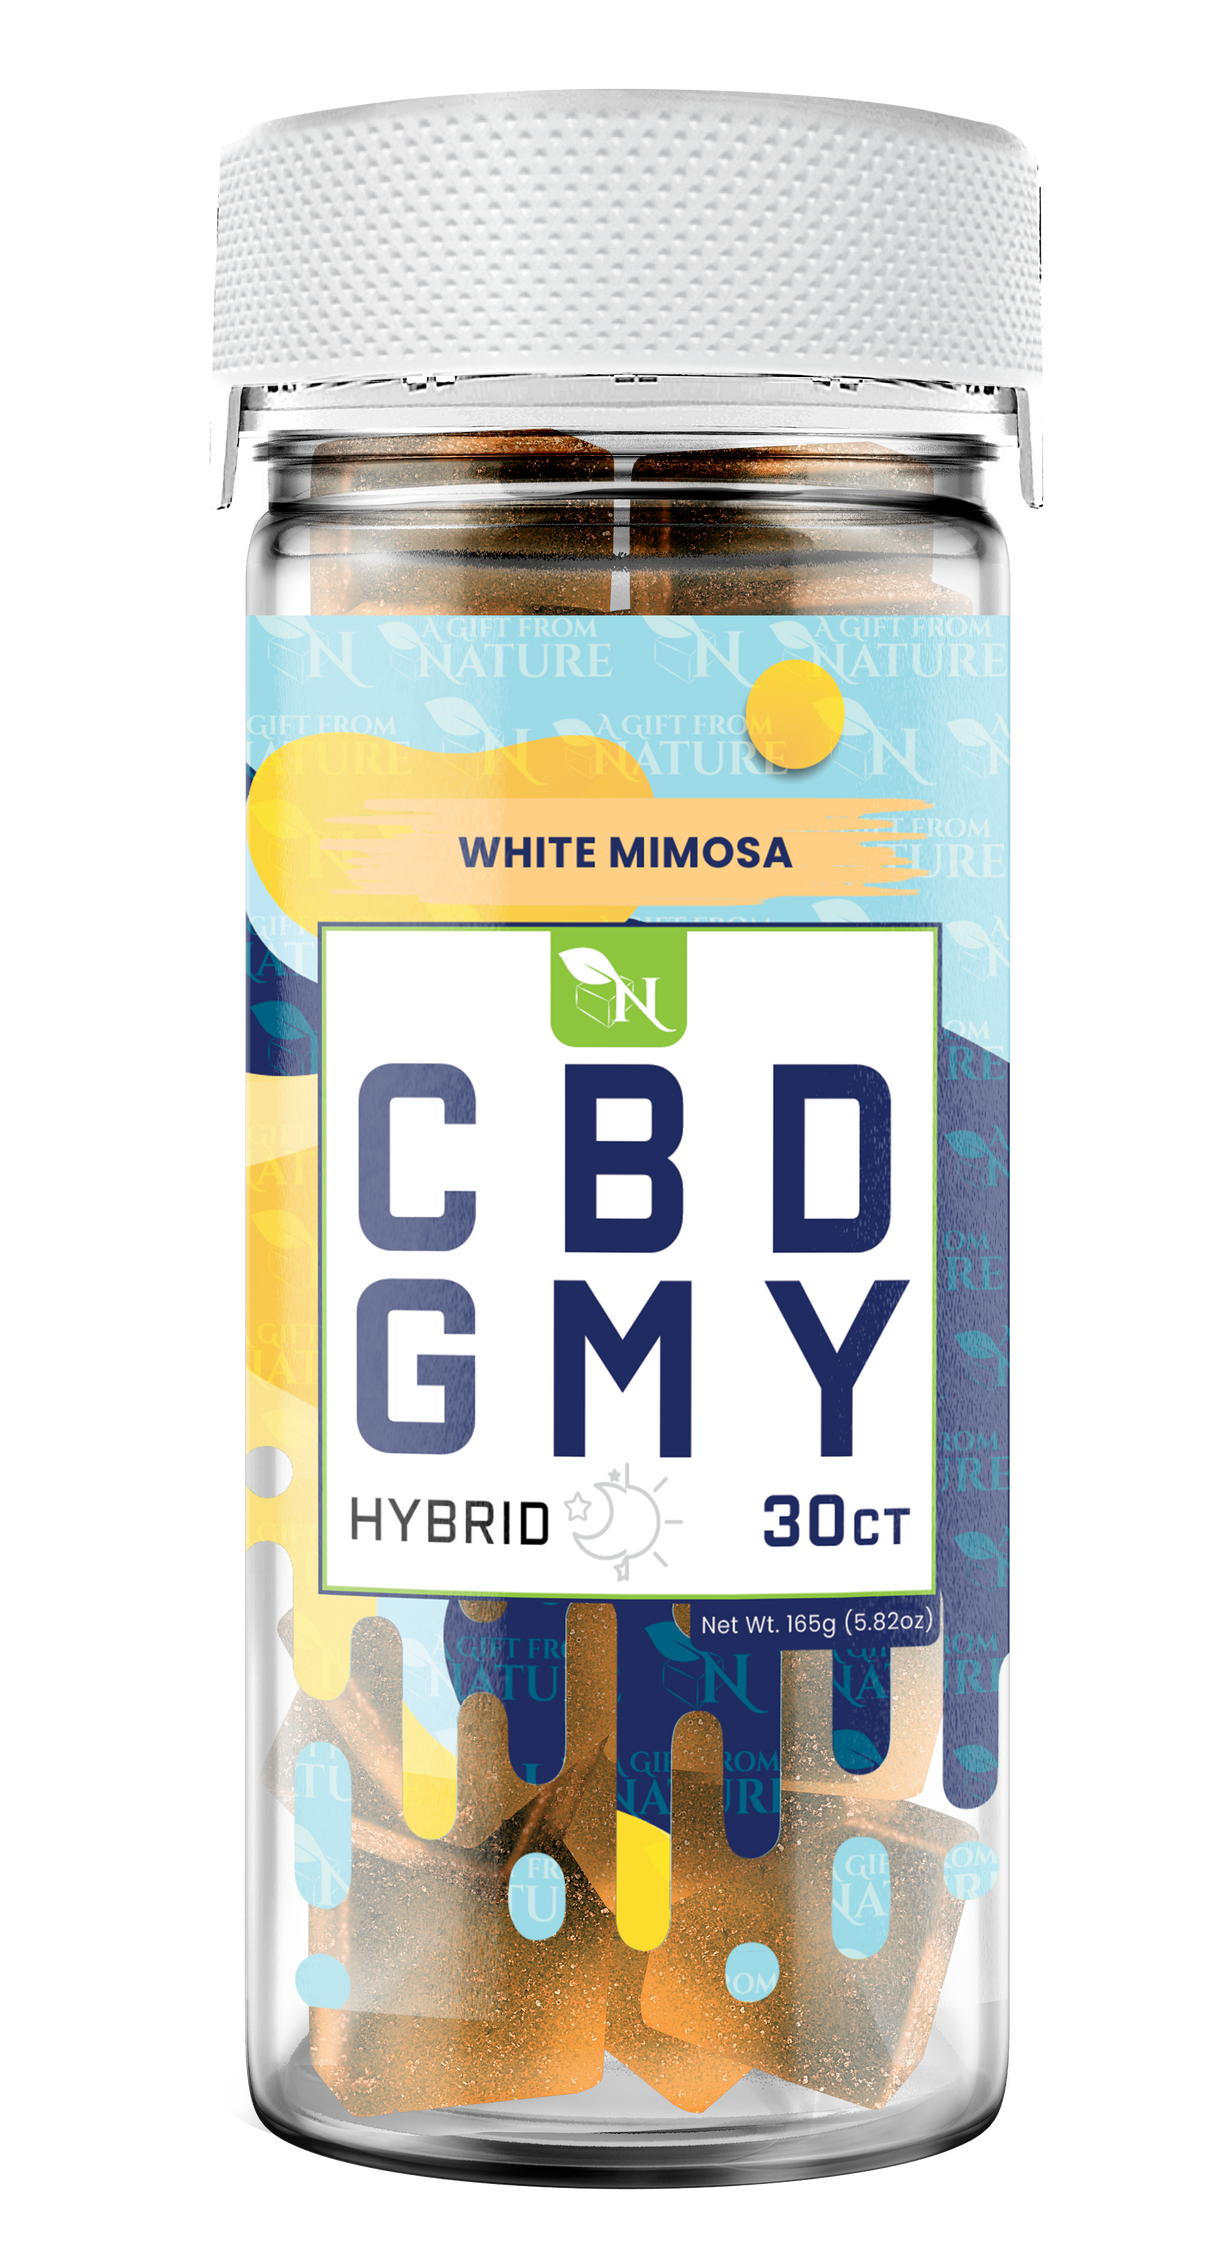 AGFN CBD Gummy: White Mimosa Hybrid (1500MG)